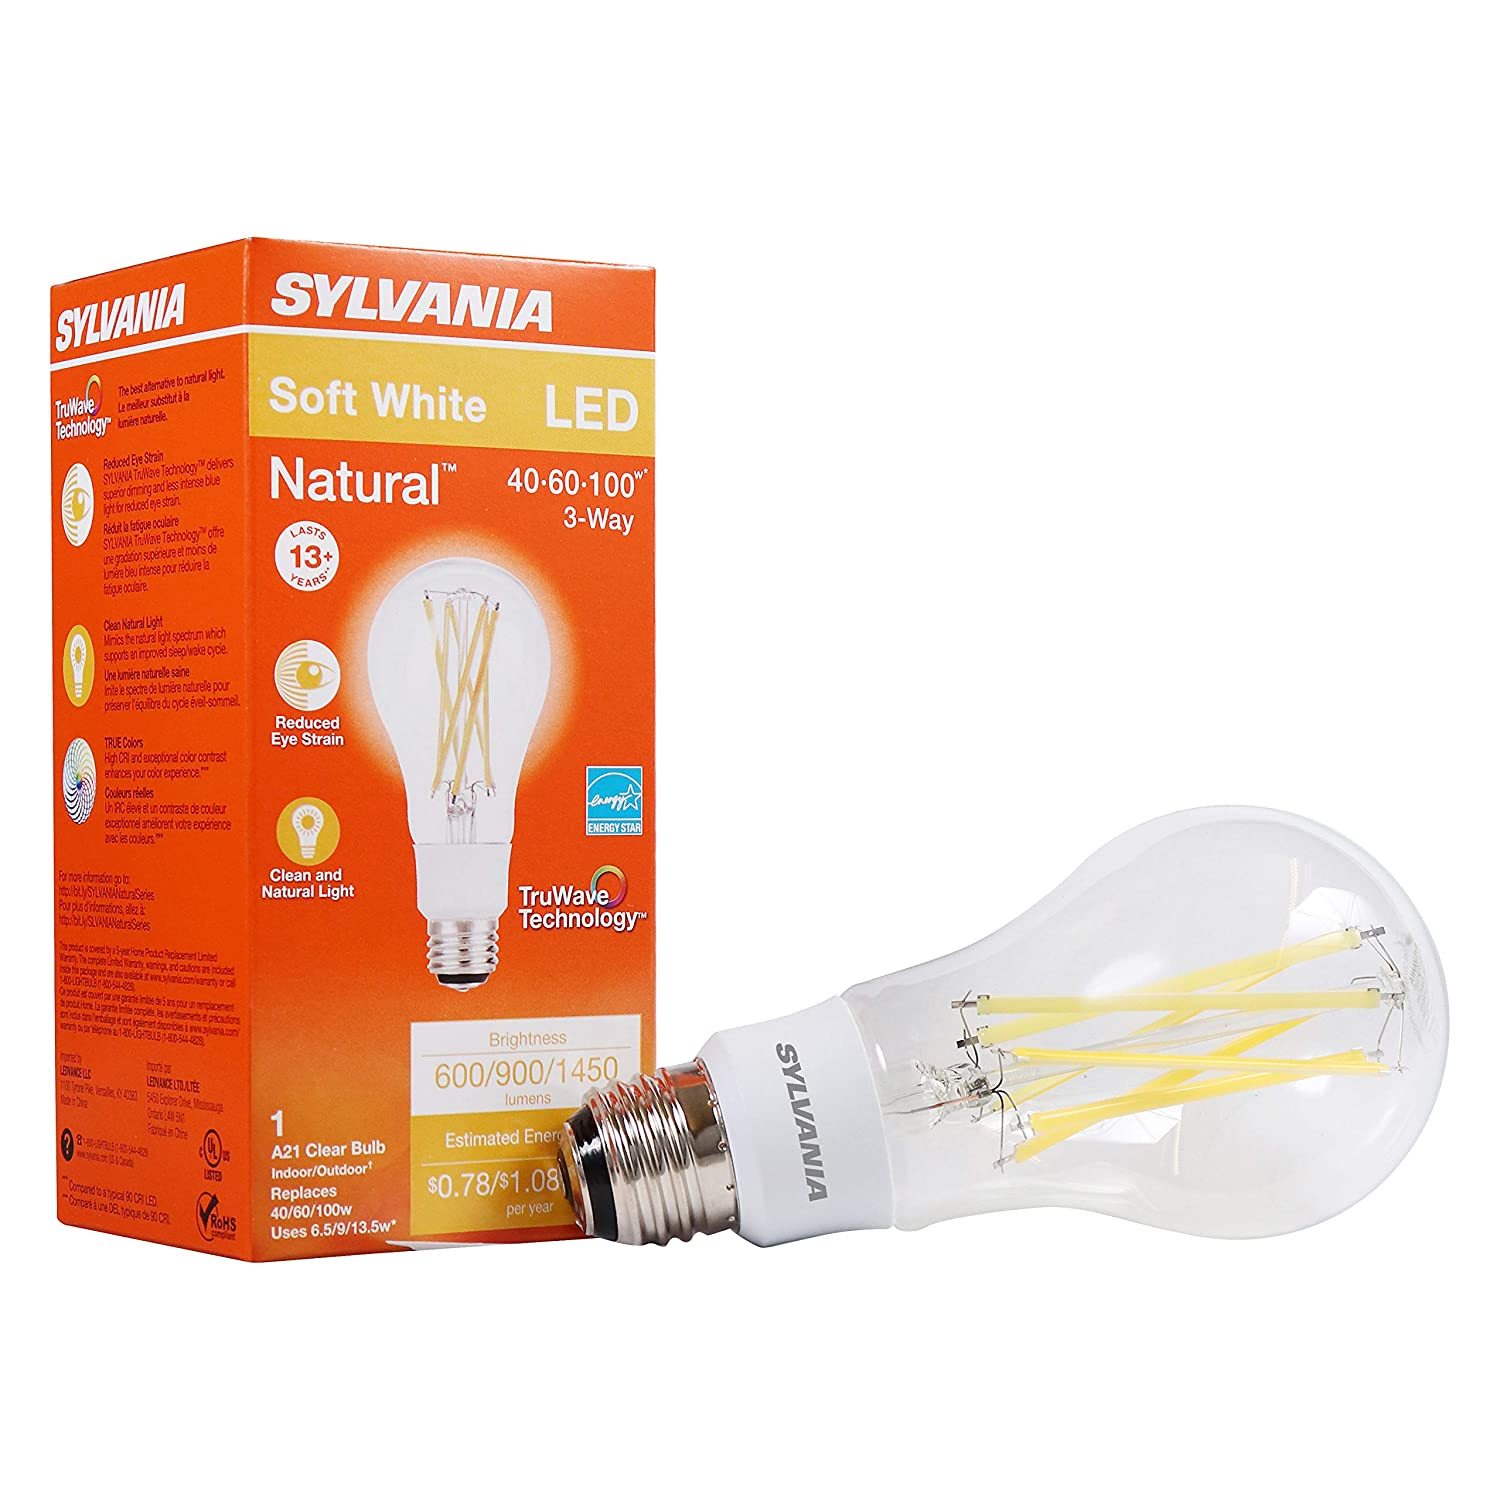 Sylvania 20921 FP21/835/ECO PENTRON Straight T5 Fluorescent Tube Light Bulb 